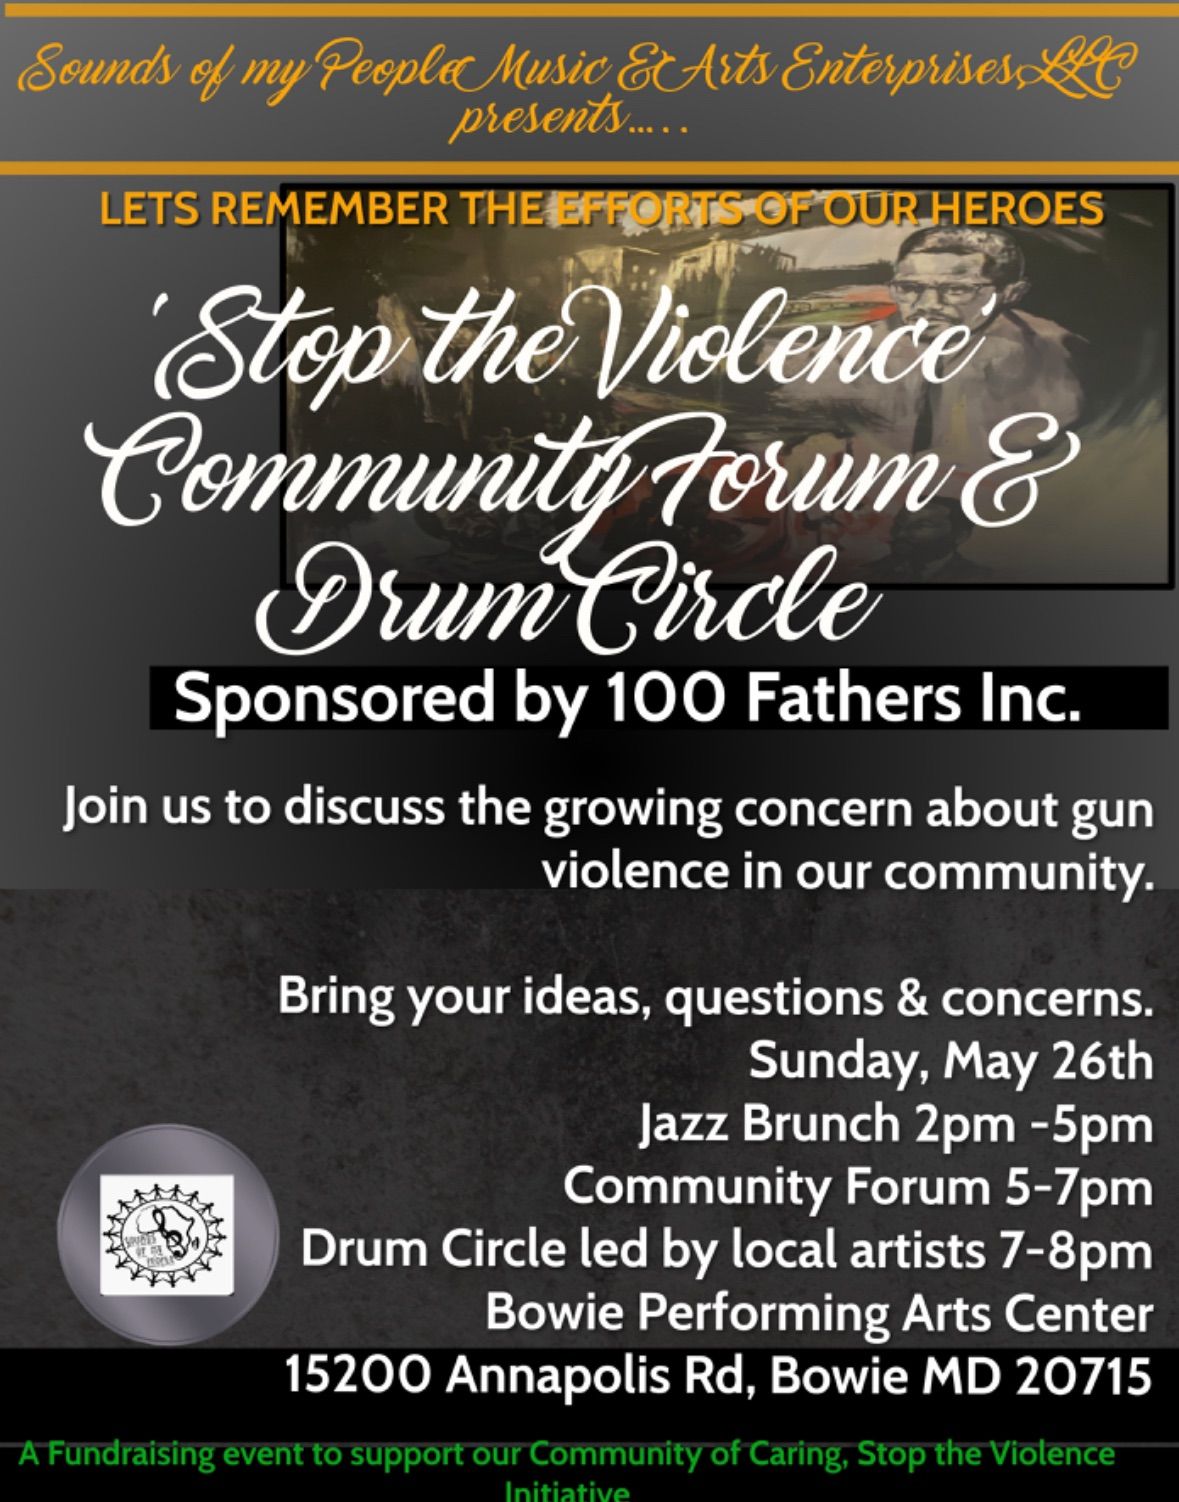 Fundraising Jazz Brunch and Community forum